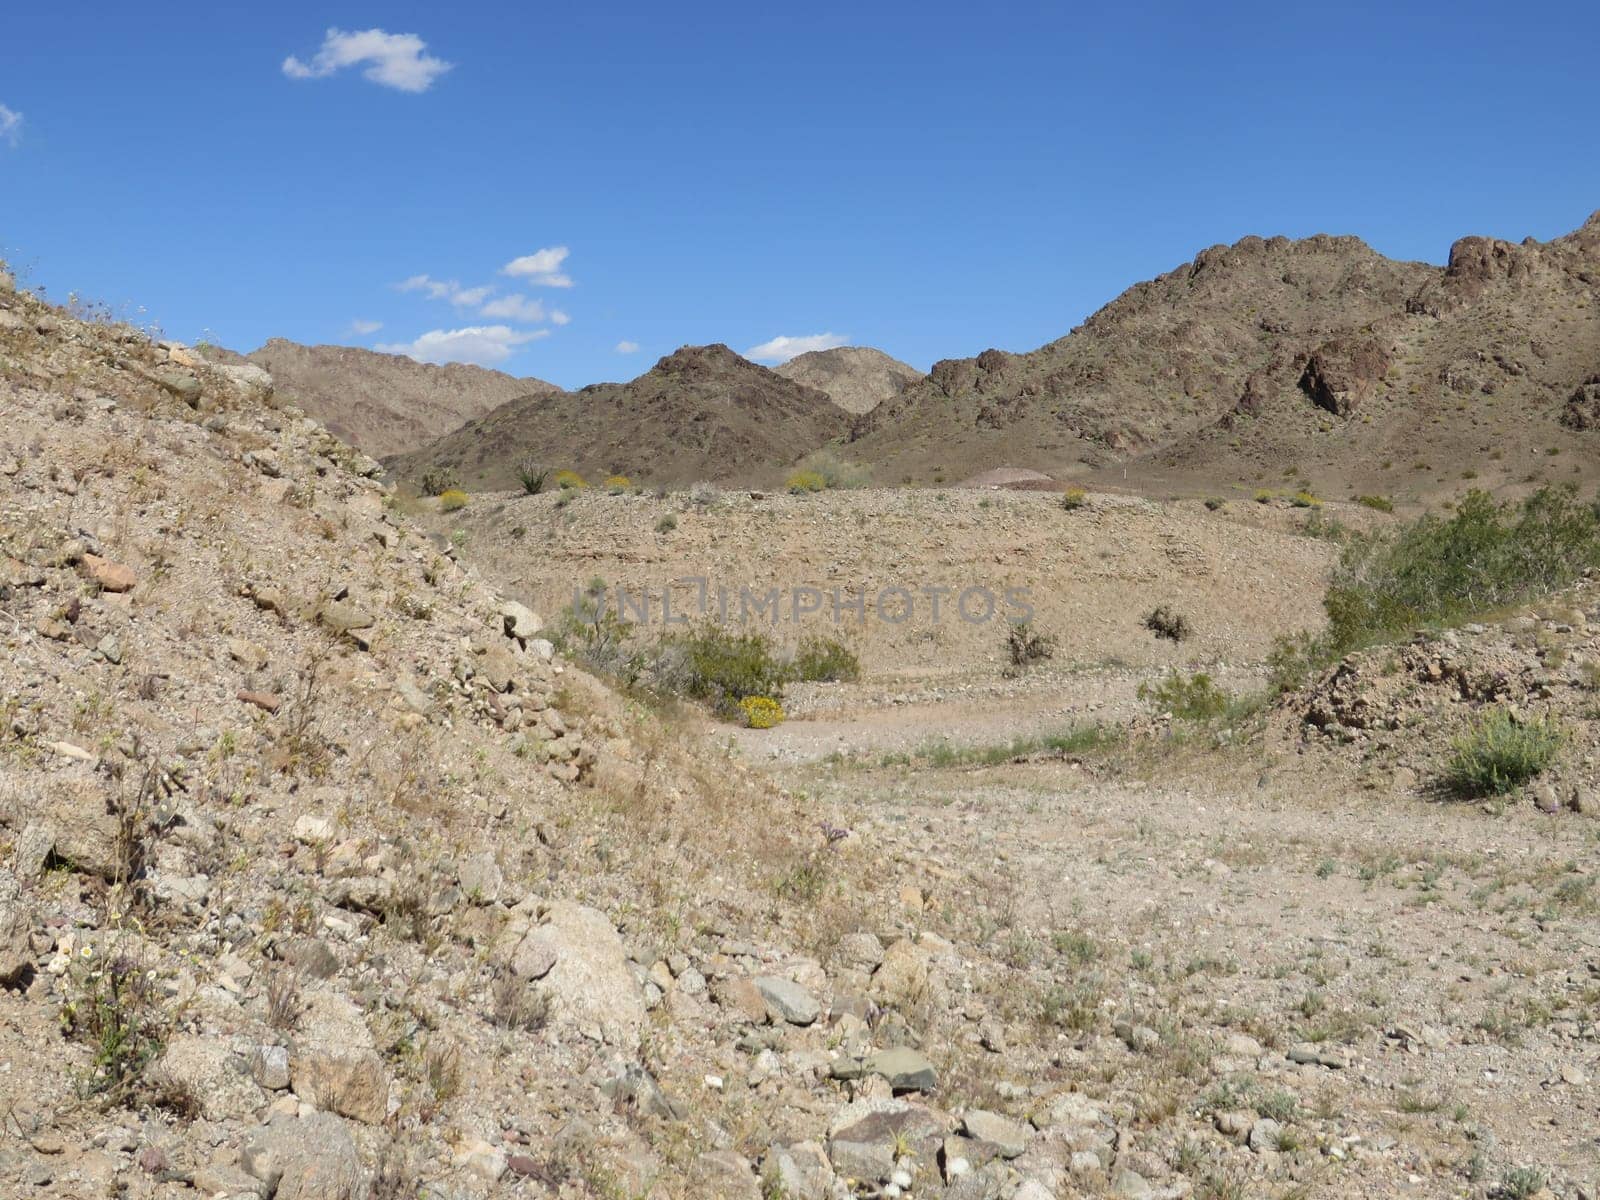 View of Old Dirt Road - Arizona Desert - Arid Rocky Terrain. High quality photo